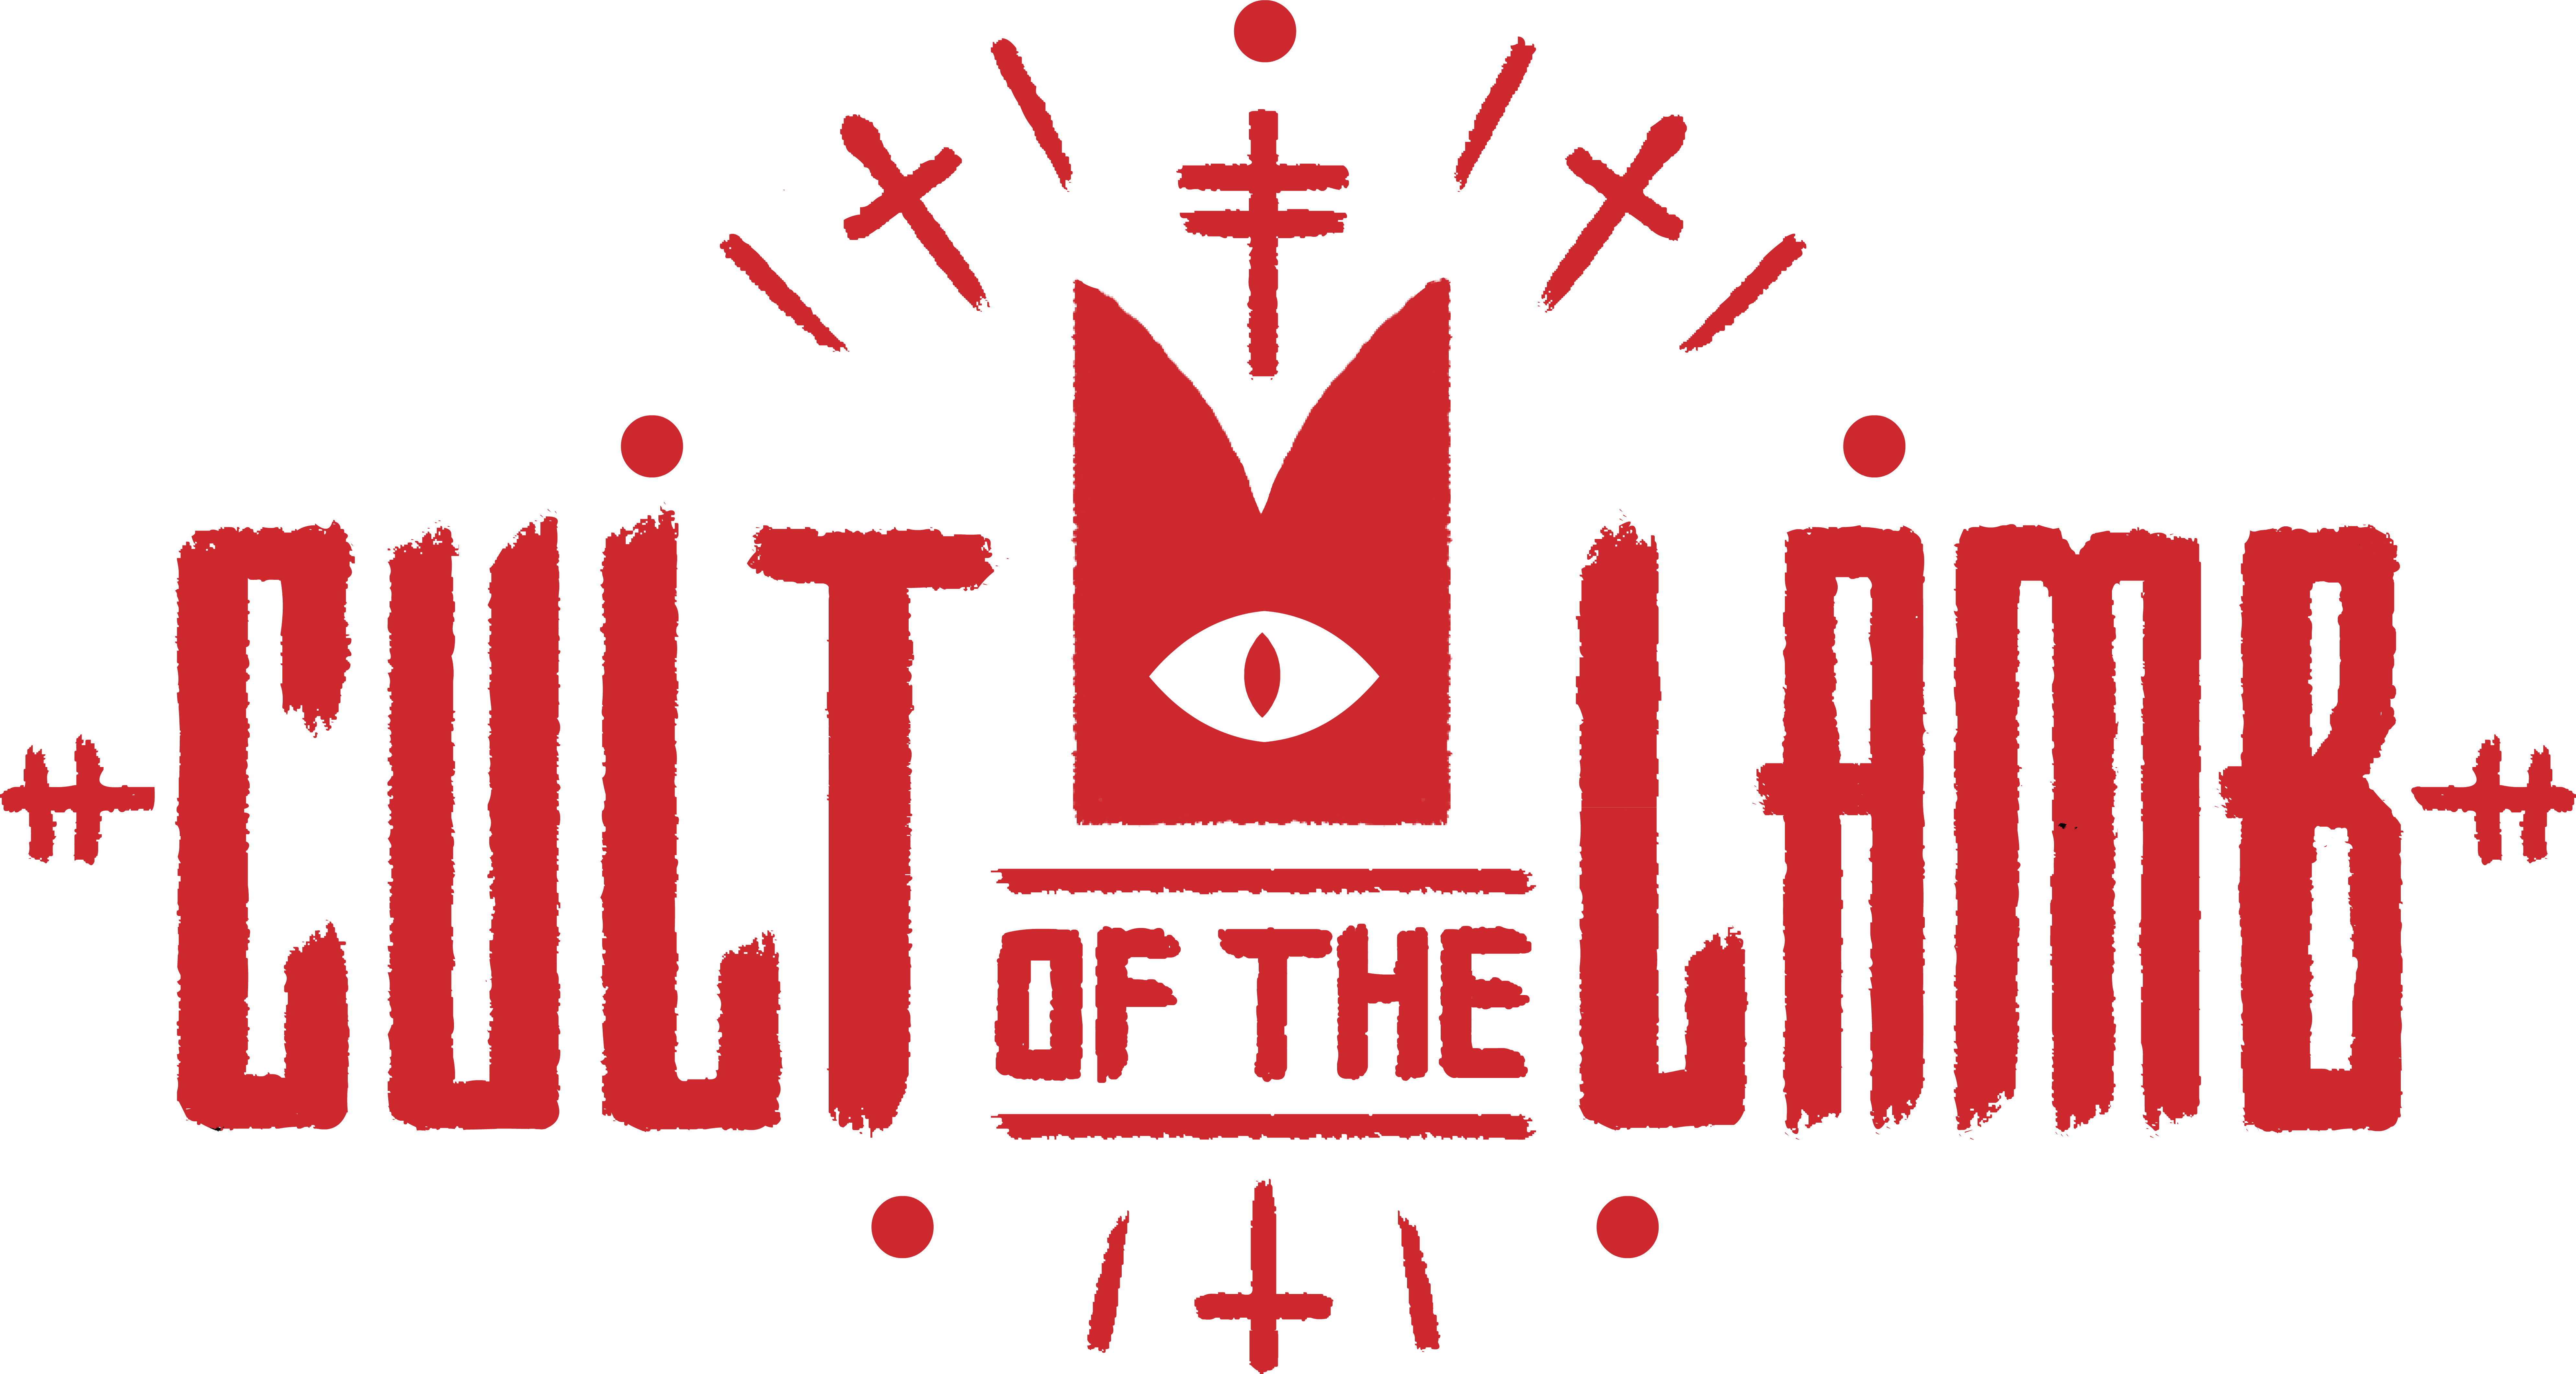 Cult of the Lamb, da Devolver Digital, é anunciado para 2022